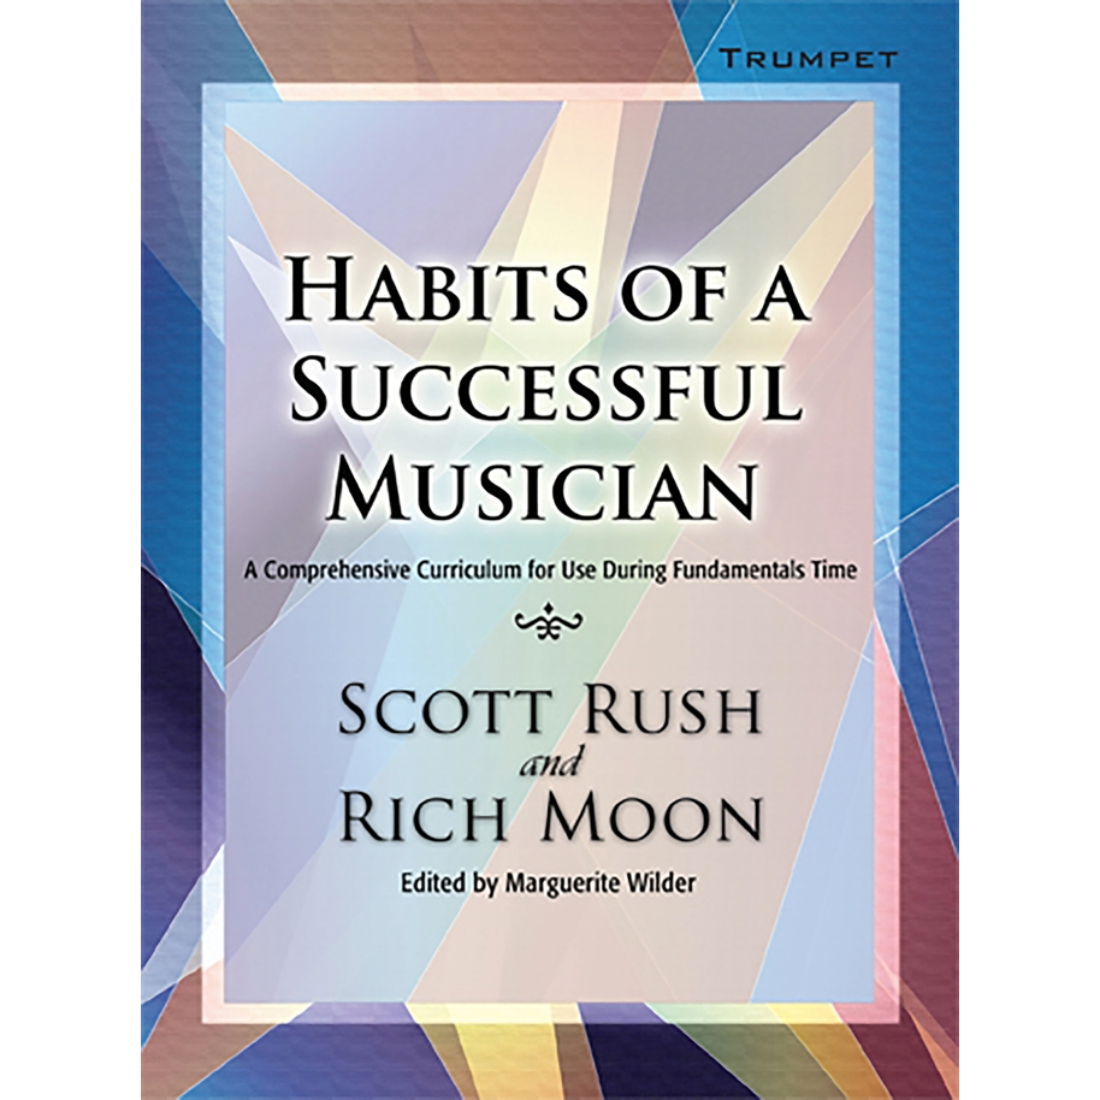 Multi-colored cover, titled Habits of a successful musician